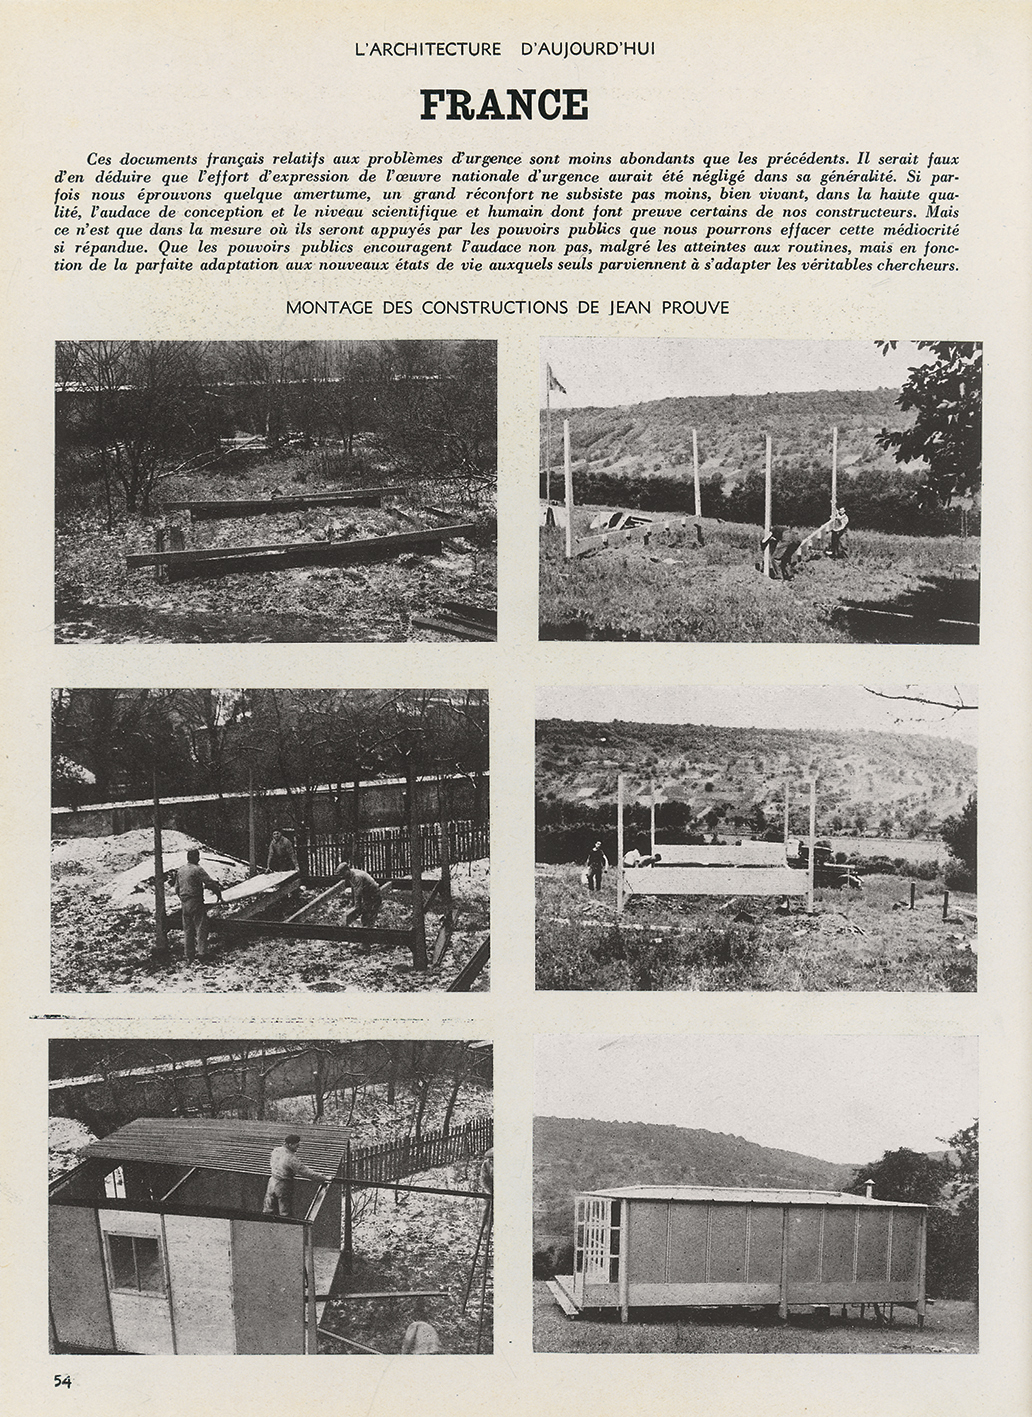 “Emergency measures. Assembling structures by Jean Prouvé” <i>L’Architecture d’aujourd’hui,</i> no. 2, July-August 1945.